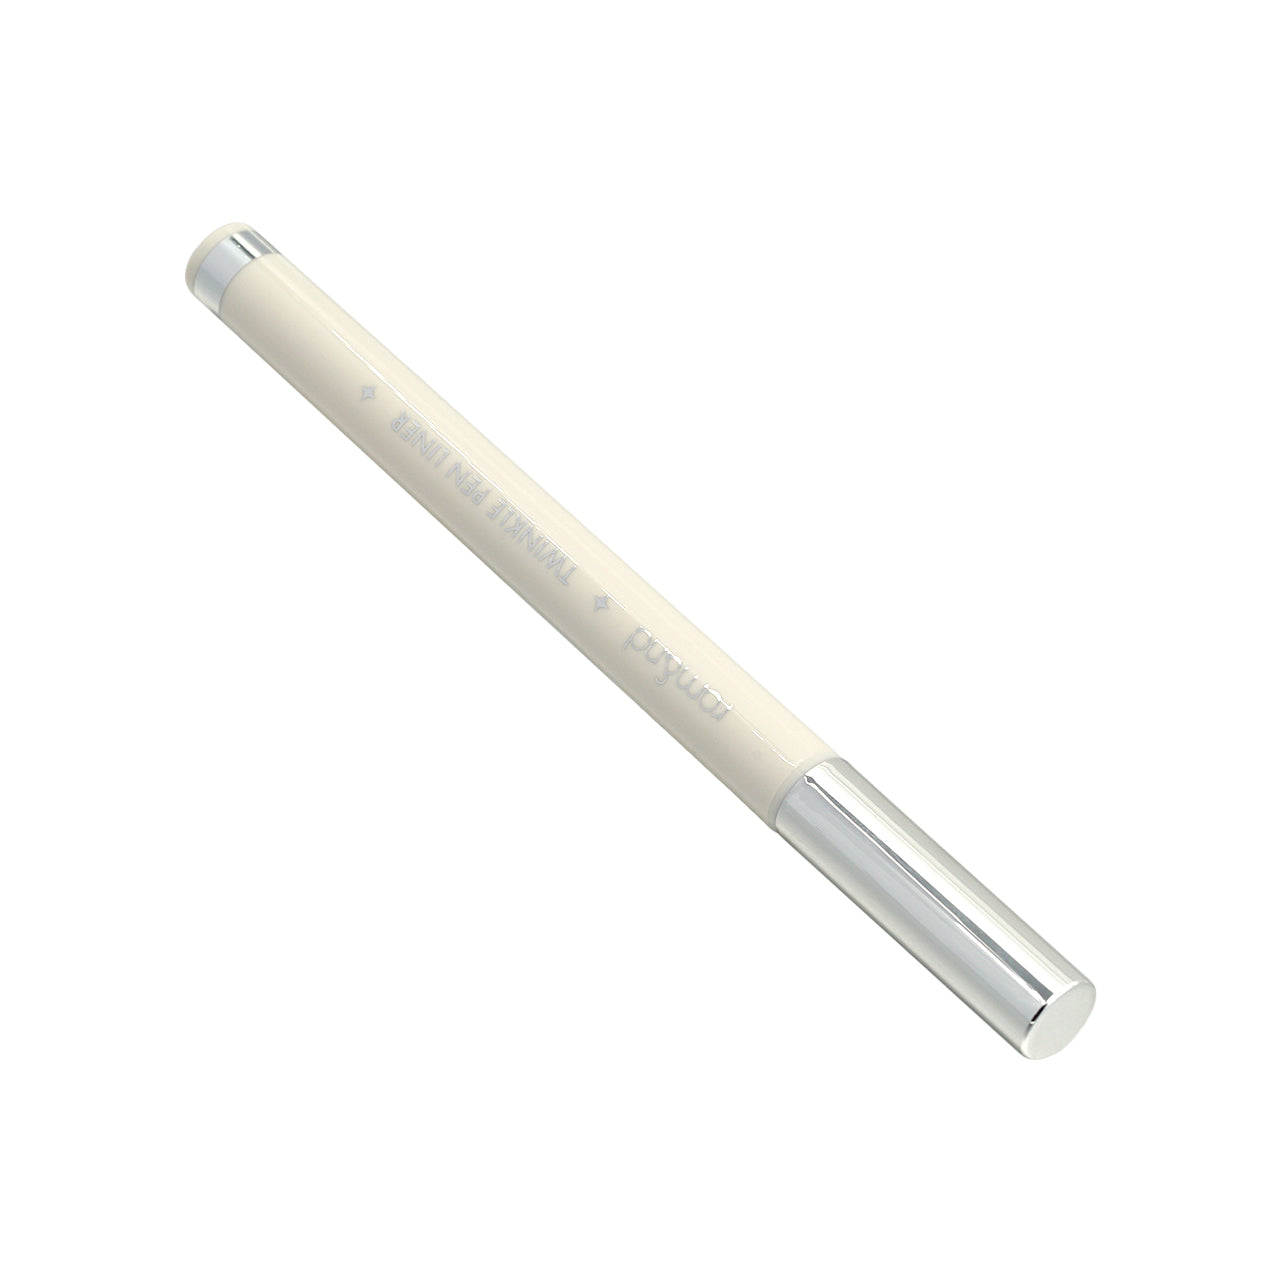 Rom&nd Twinkle Pen Liner #01 Silver Flake 1pc - Sasa Global eShop